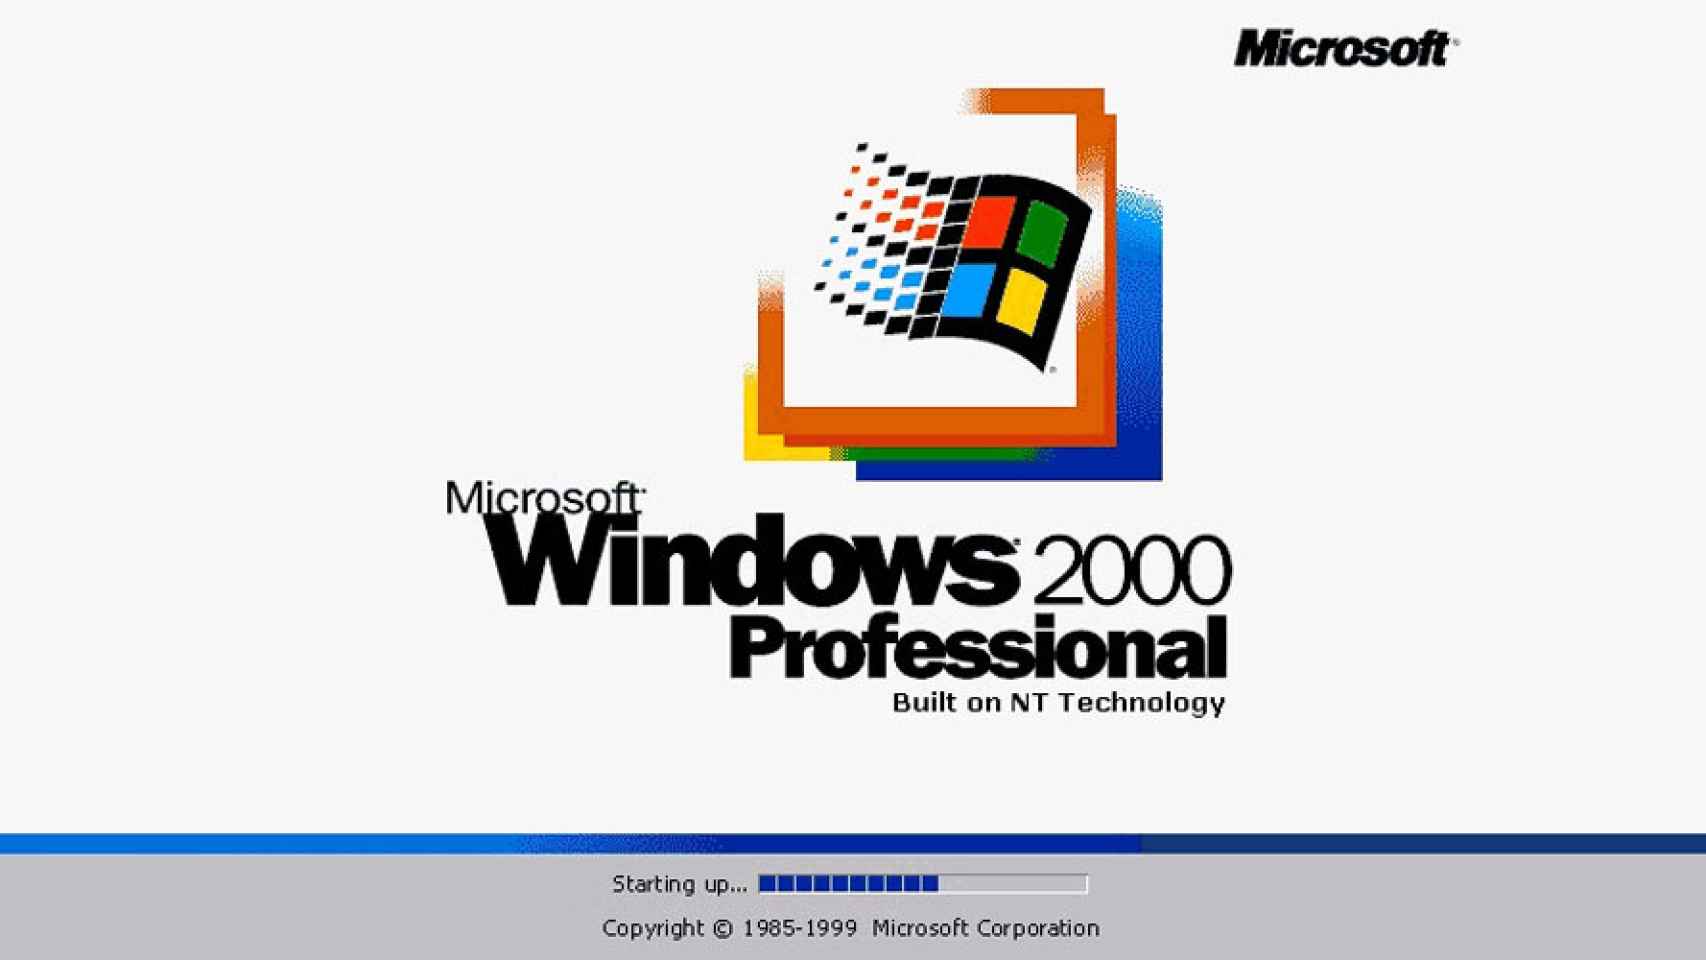 microsoft windows 2000 profesional built on nt technology